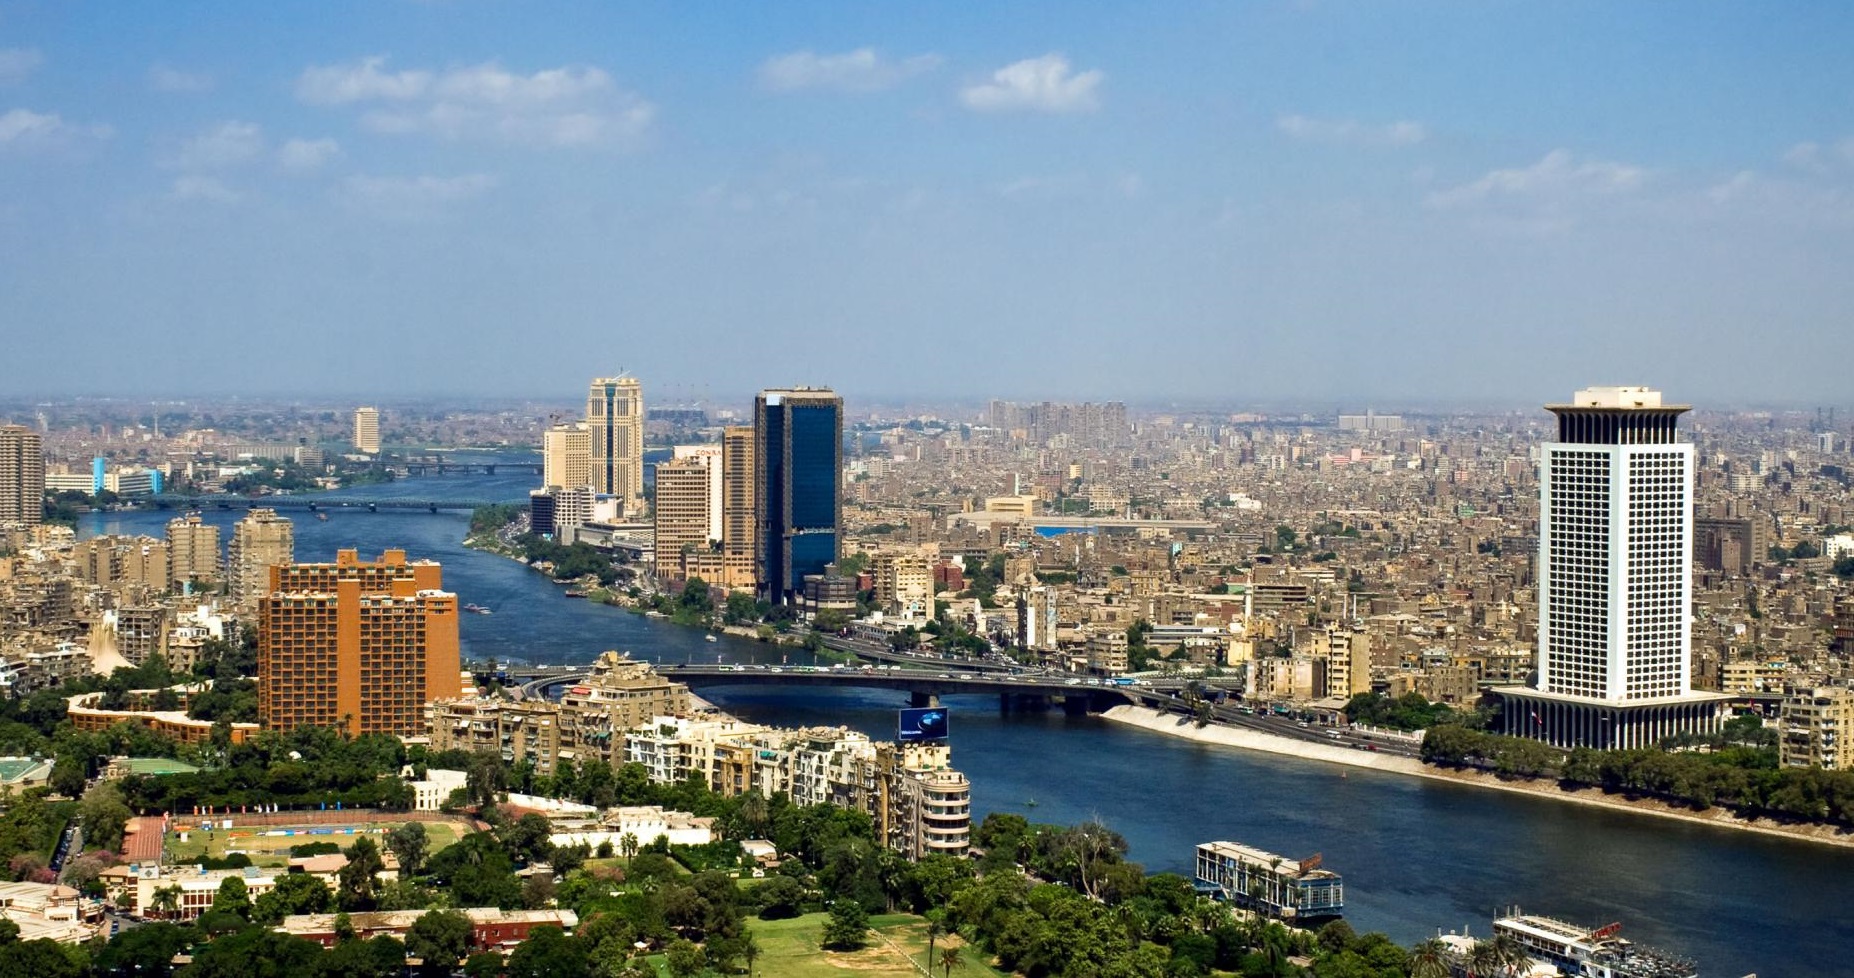 Egyptian Property Prices Four Times More Than USA